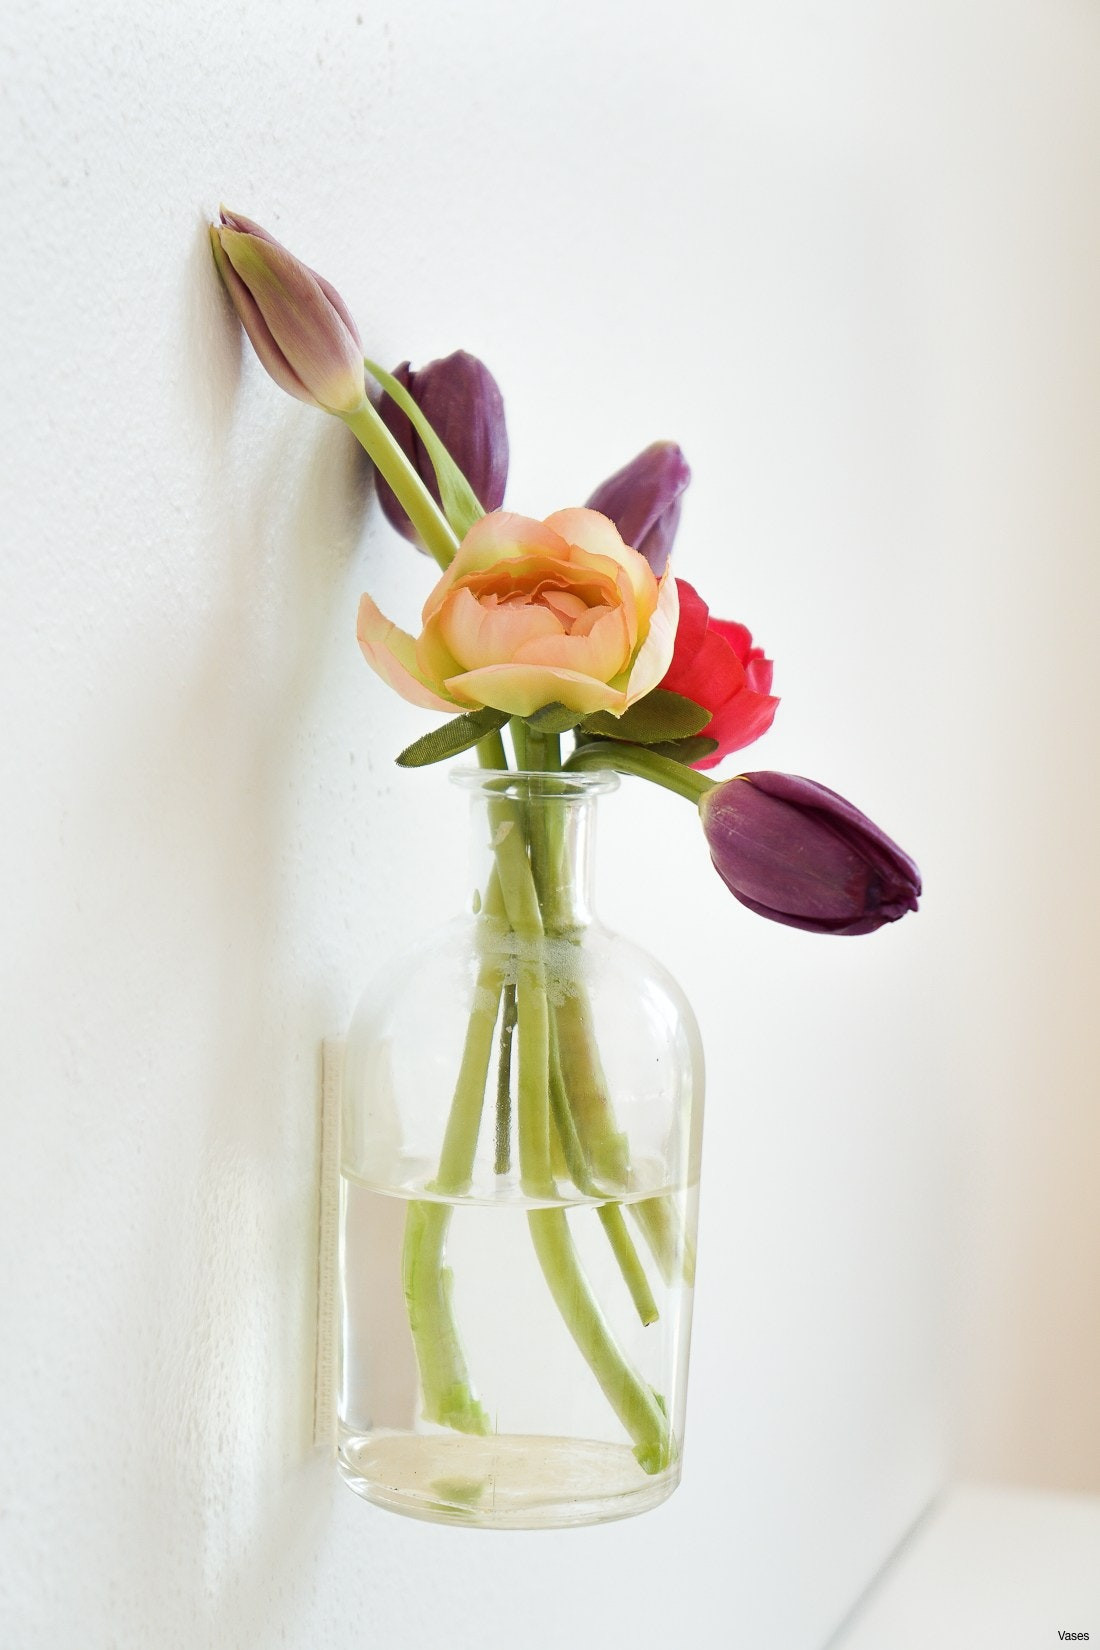 Silver Rectangle Vase Of Rectangle Flower Vases Gallery Il Fullxfull L7e9h Vases Wall Flower In Rectangle Flower Vases Gallery Il Fullxfull L7e9h Vases Wall Flower Vase Zoomi 0d Decor Inspiration Of